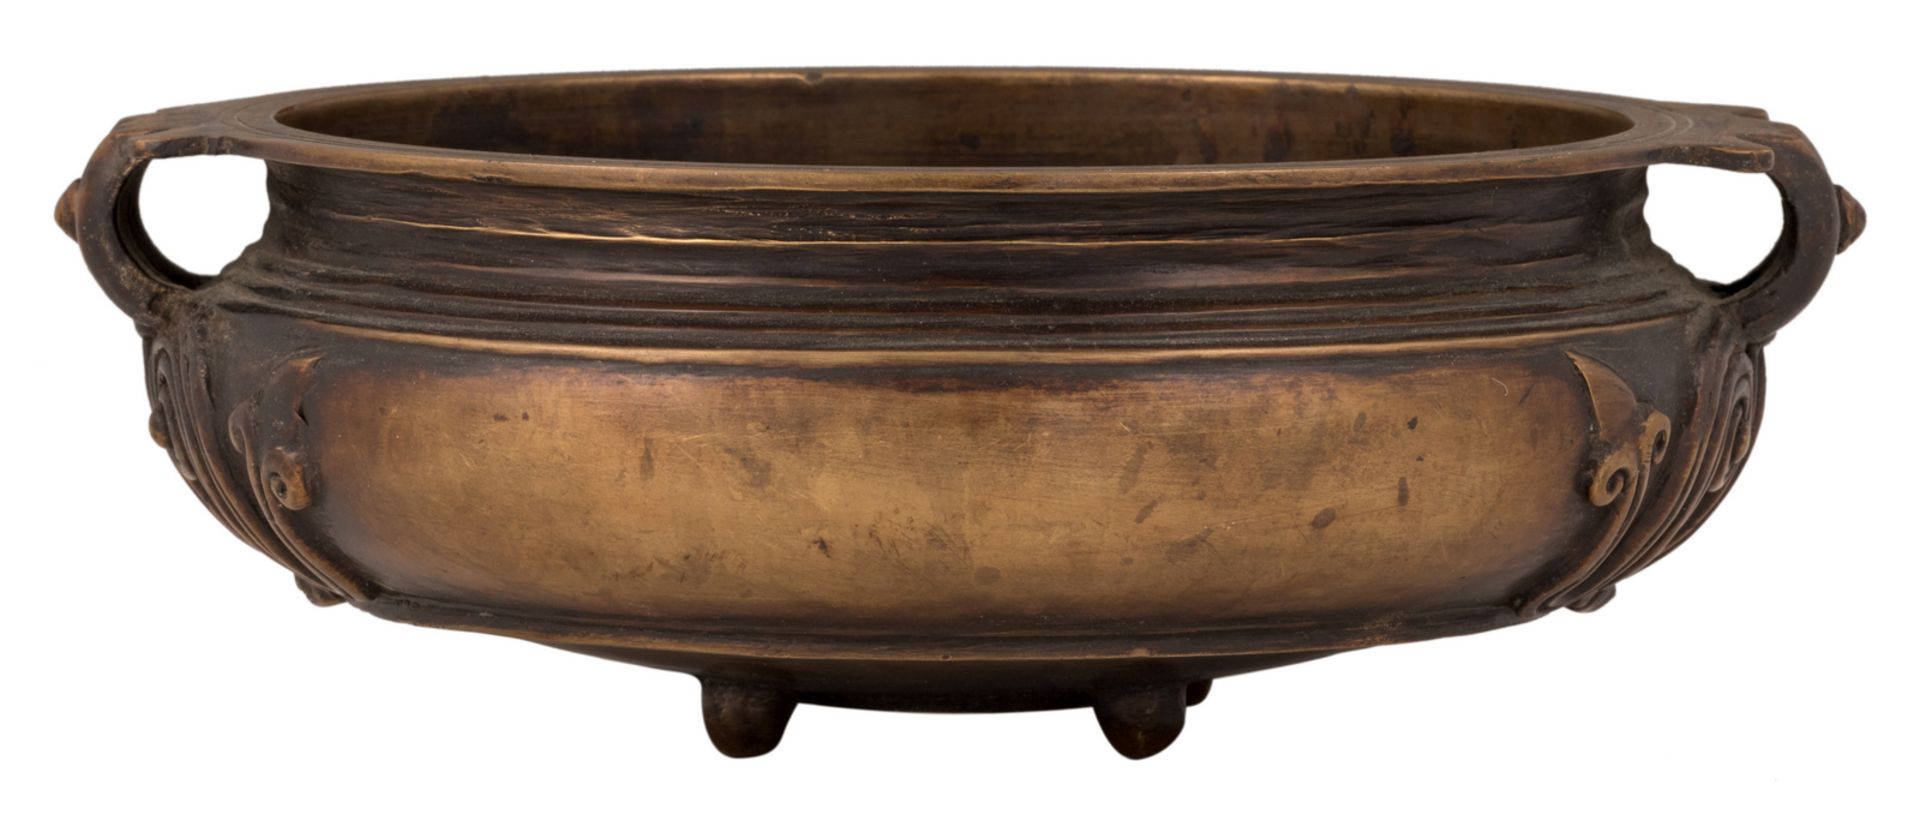 An Indian patinated bronze vessel, H 9 cm - ø 25 cm